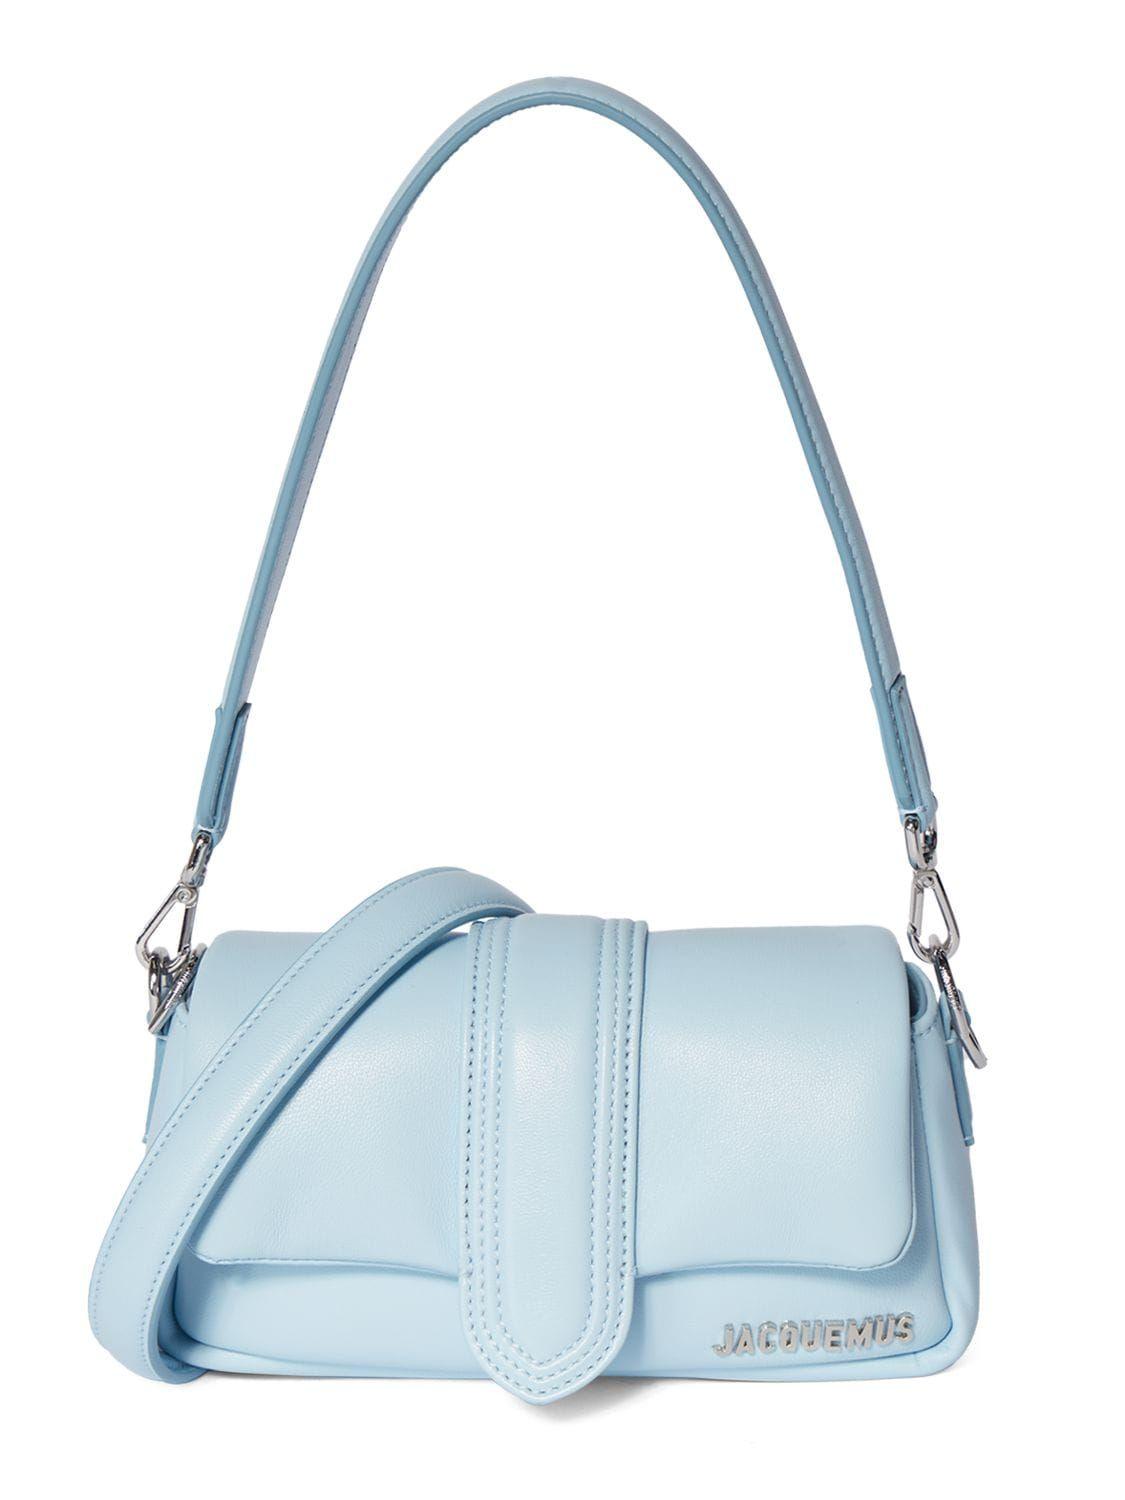 Jacquemus Le Petit Bambimou Leather Shoulder Bag in Blue | Lyst